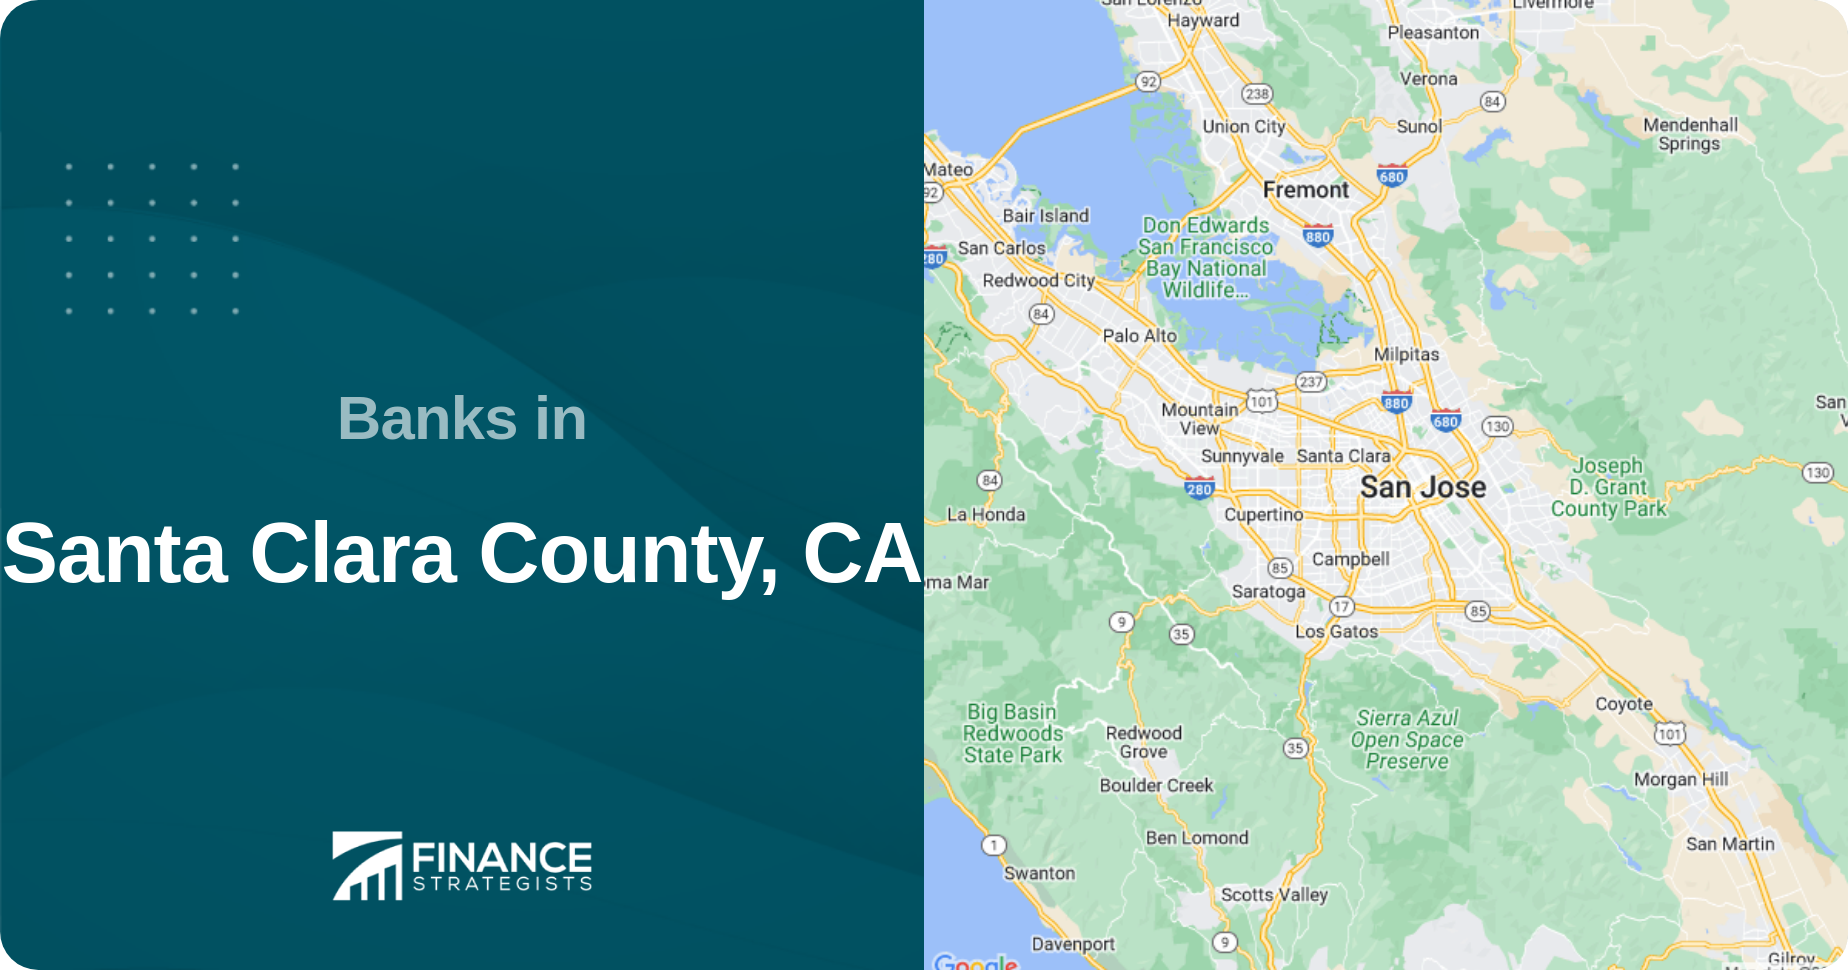 Banks in Santa Clara County, CA